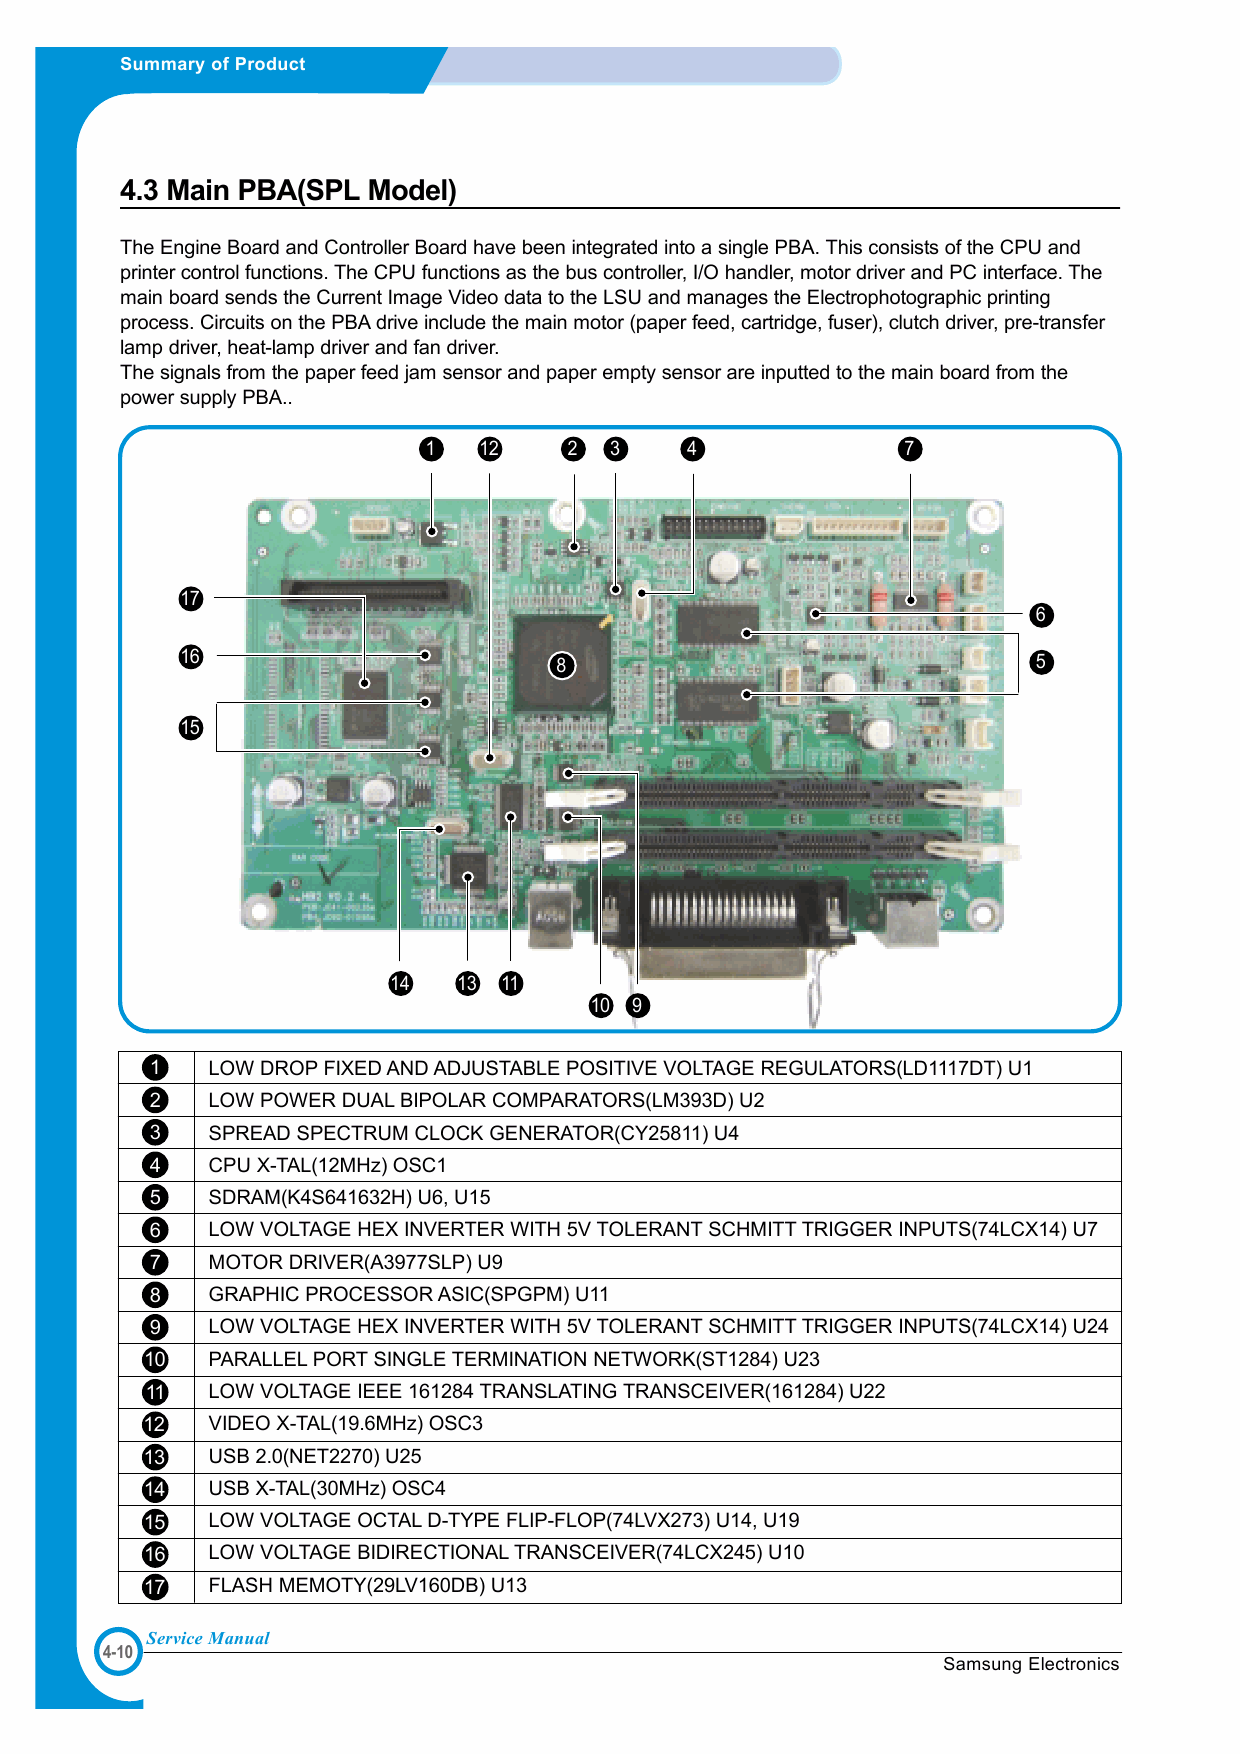 Samsung Laser-Printer ML-2250 2251N 2252W Parts and Service Manual-2